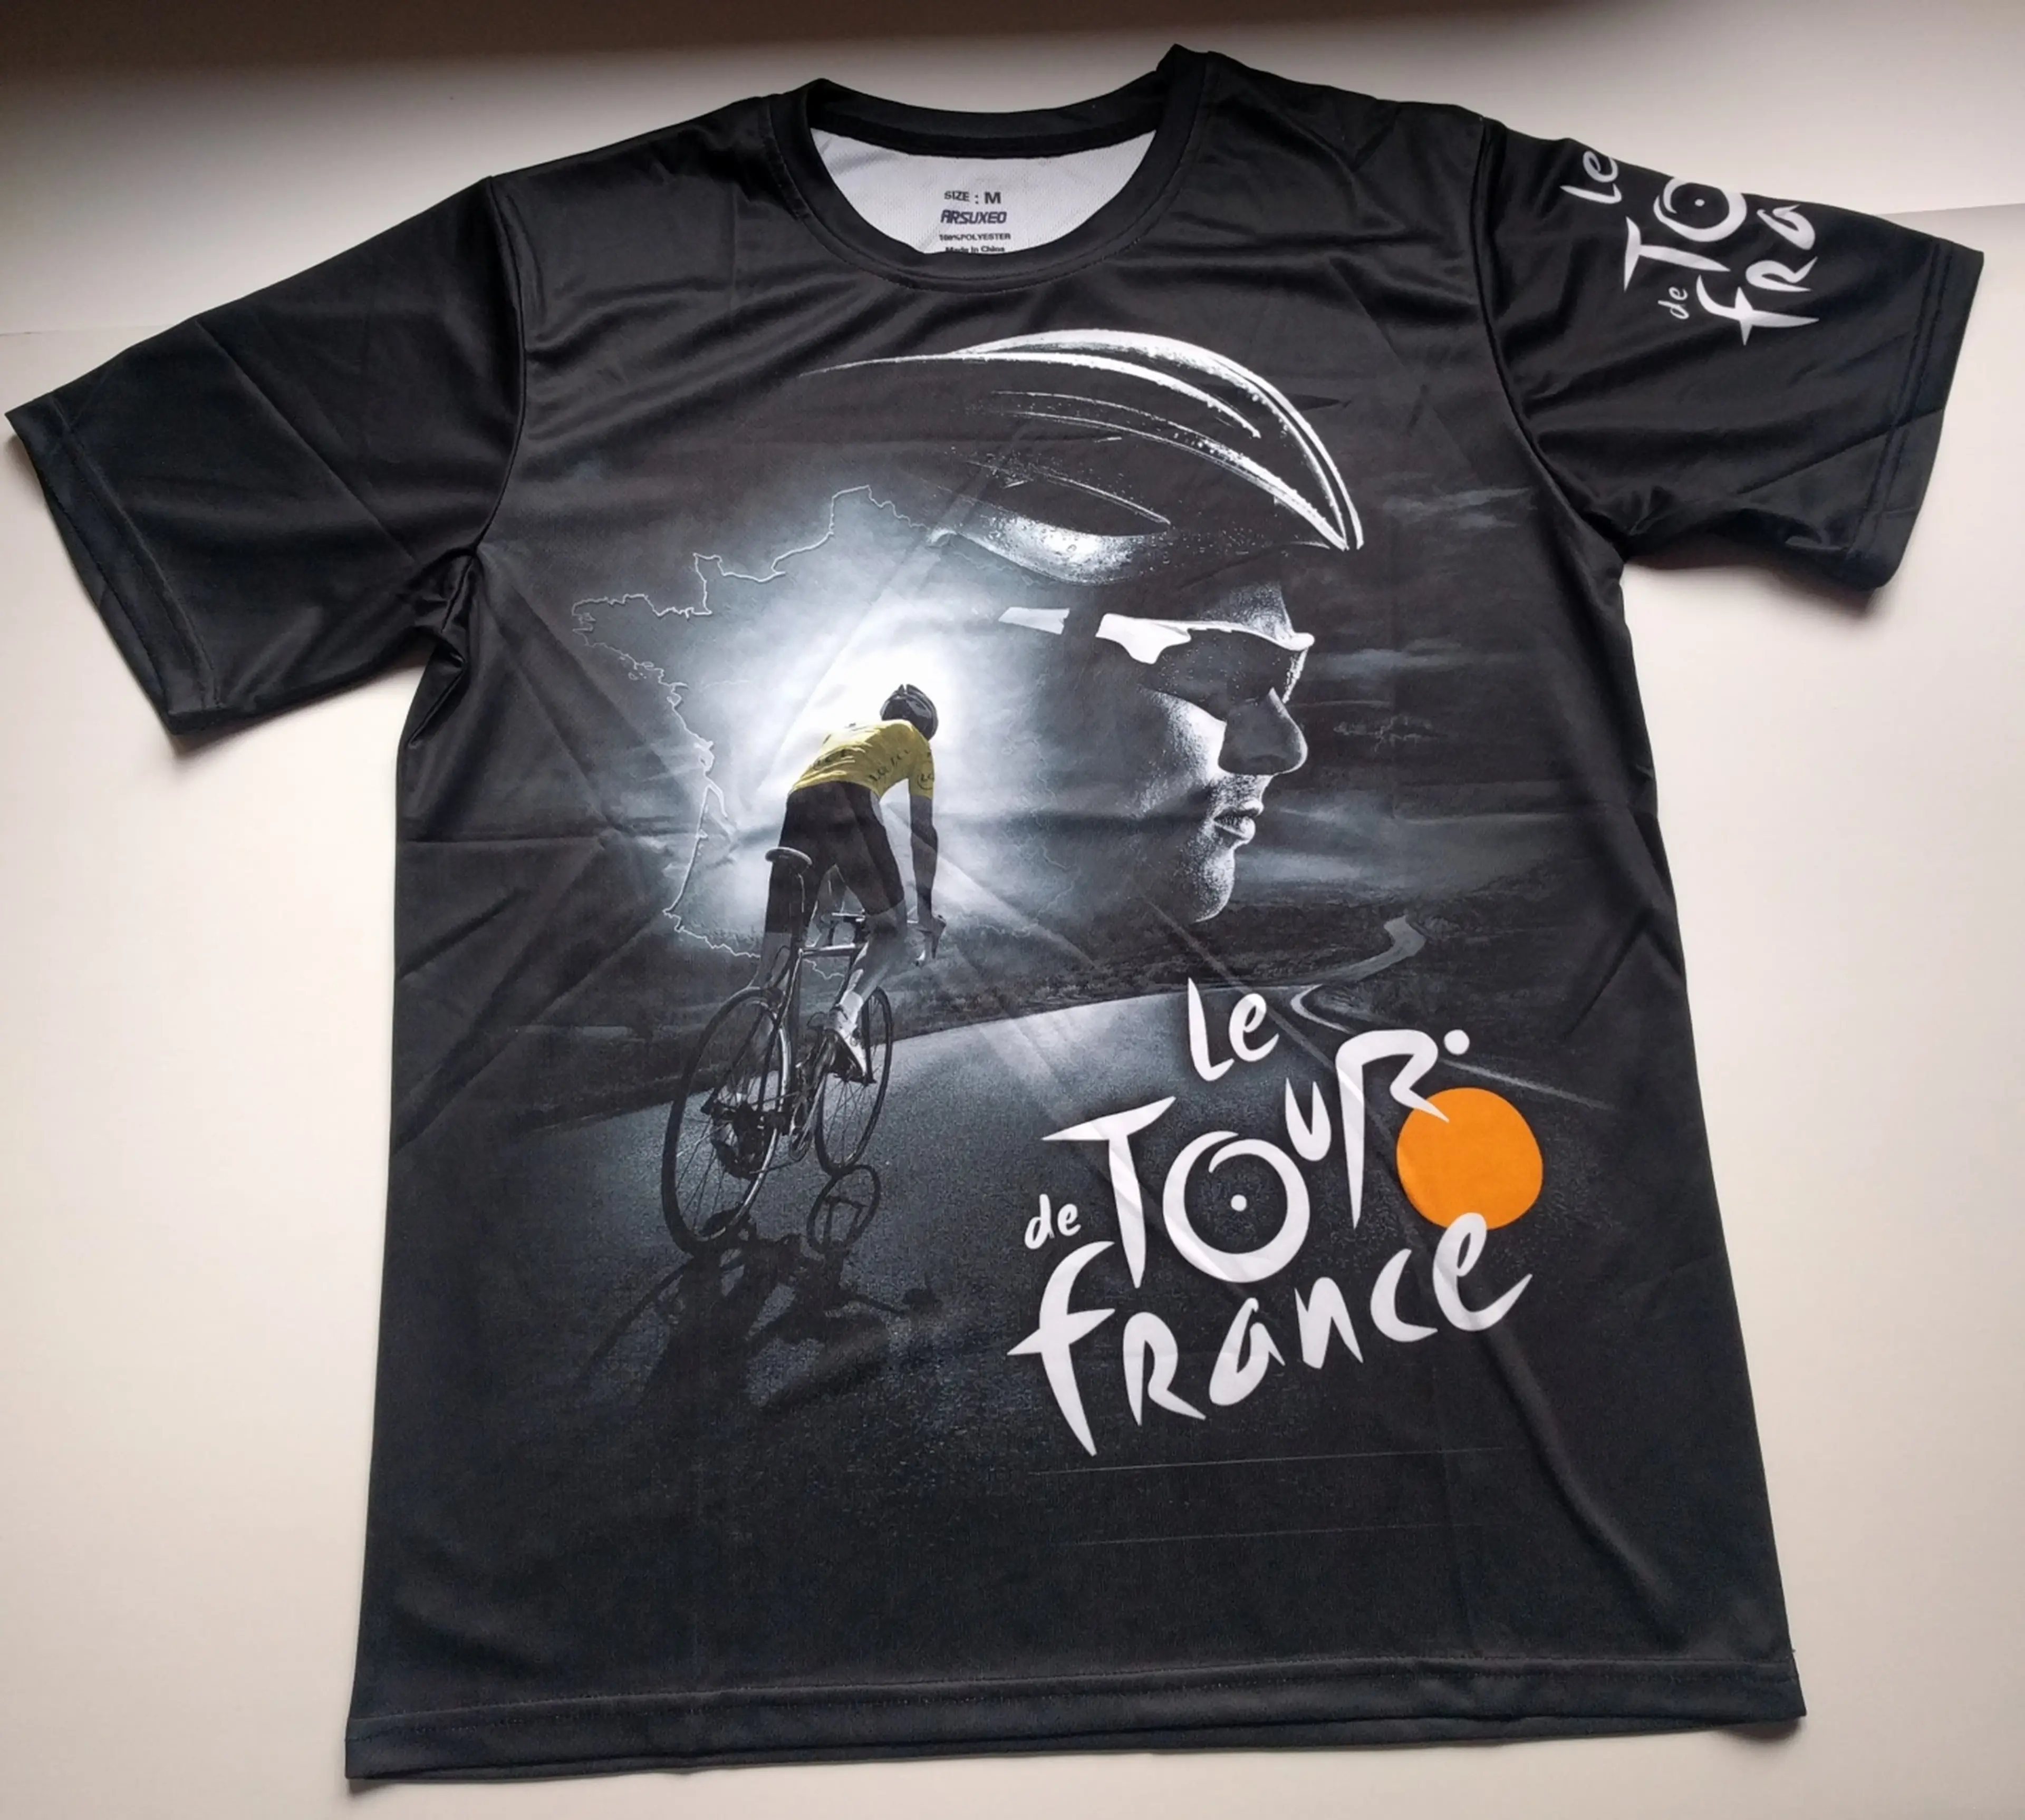 1. Tricou Tour de France t4 replica